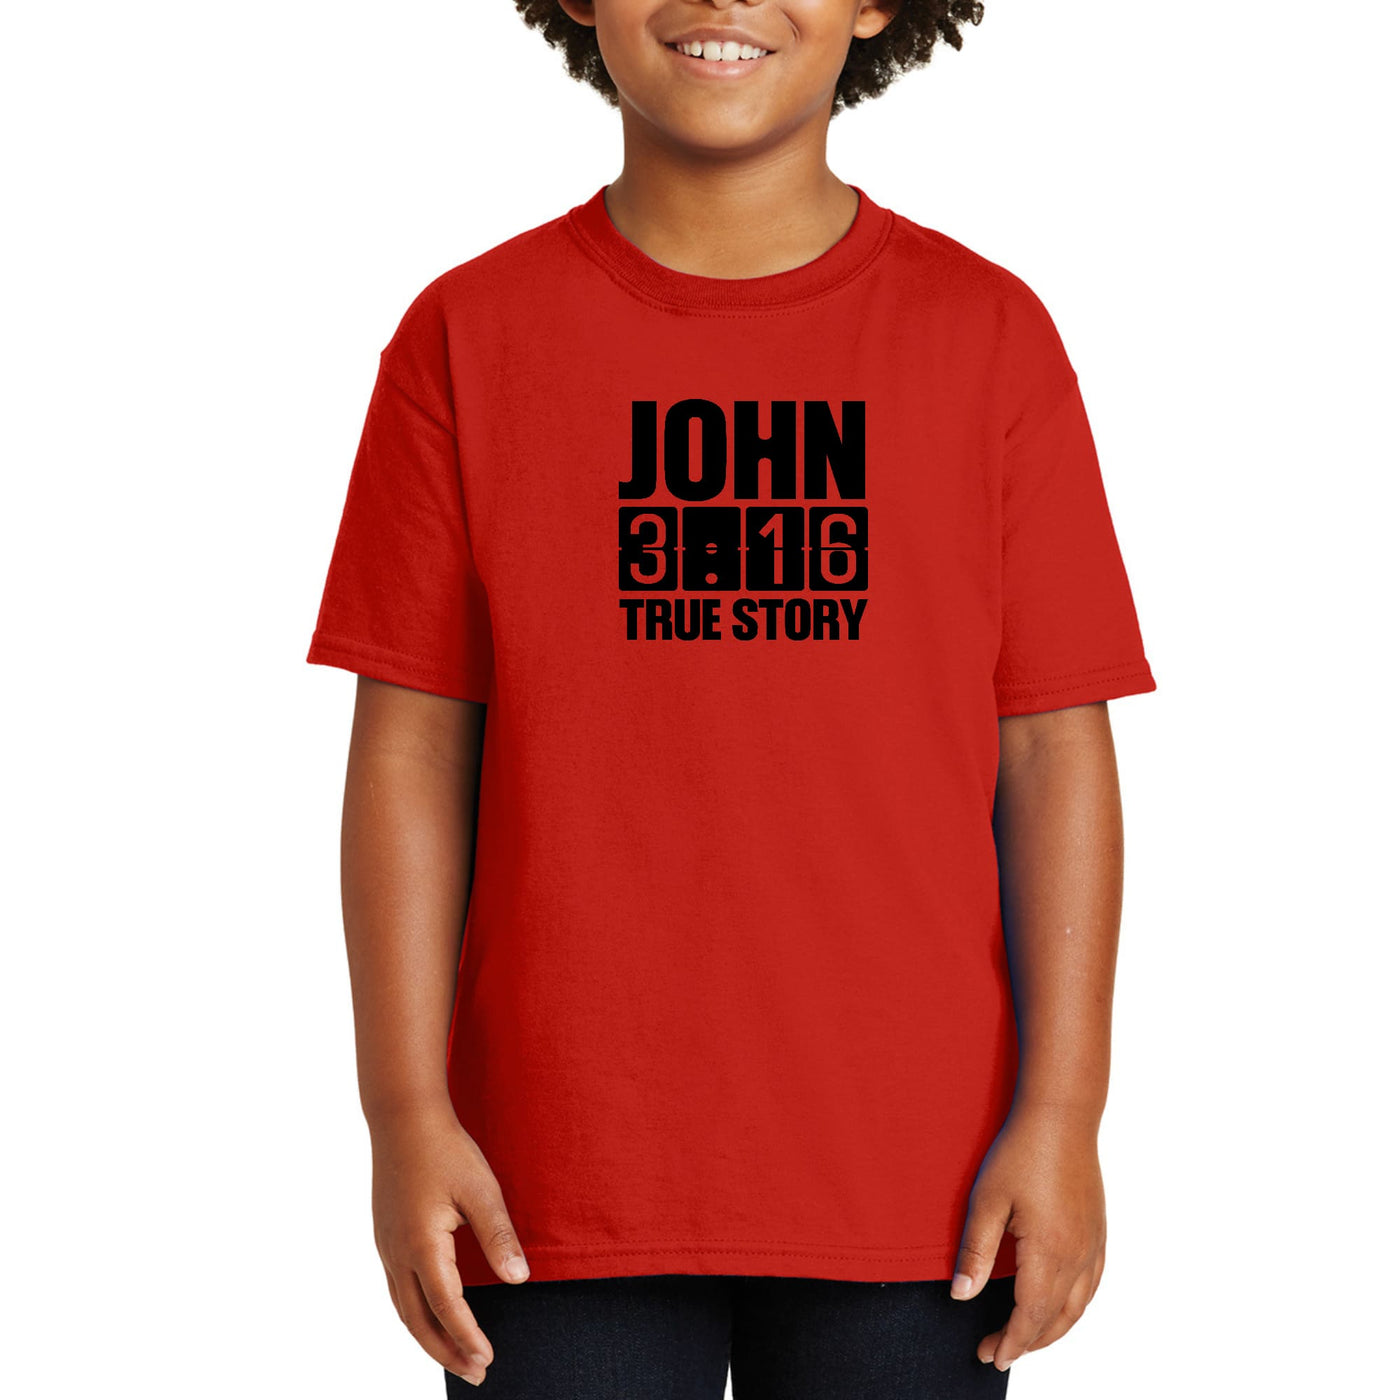 Youth Short Sleeve Graphic T-shirt John 3:16 True Story Print - Youth | T-Shirts